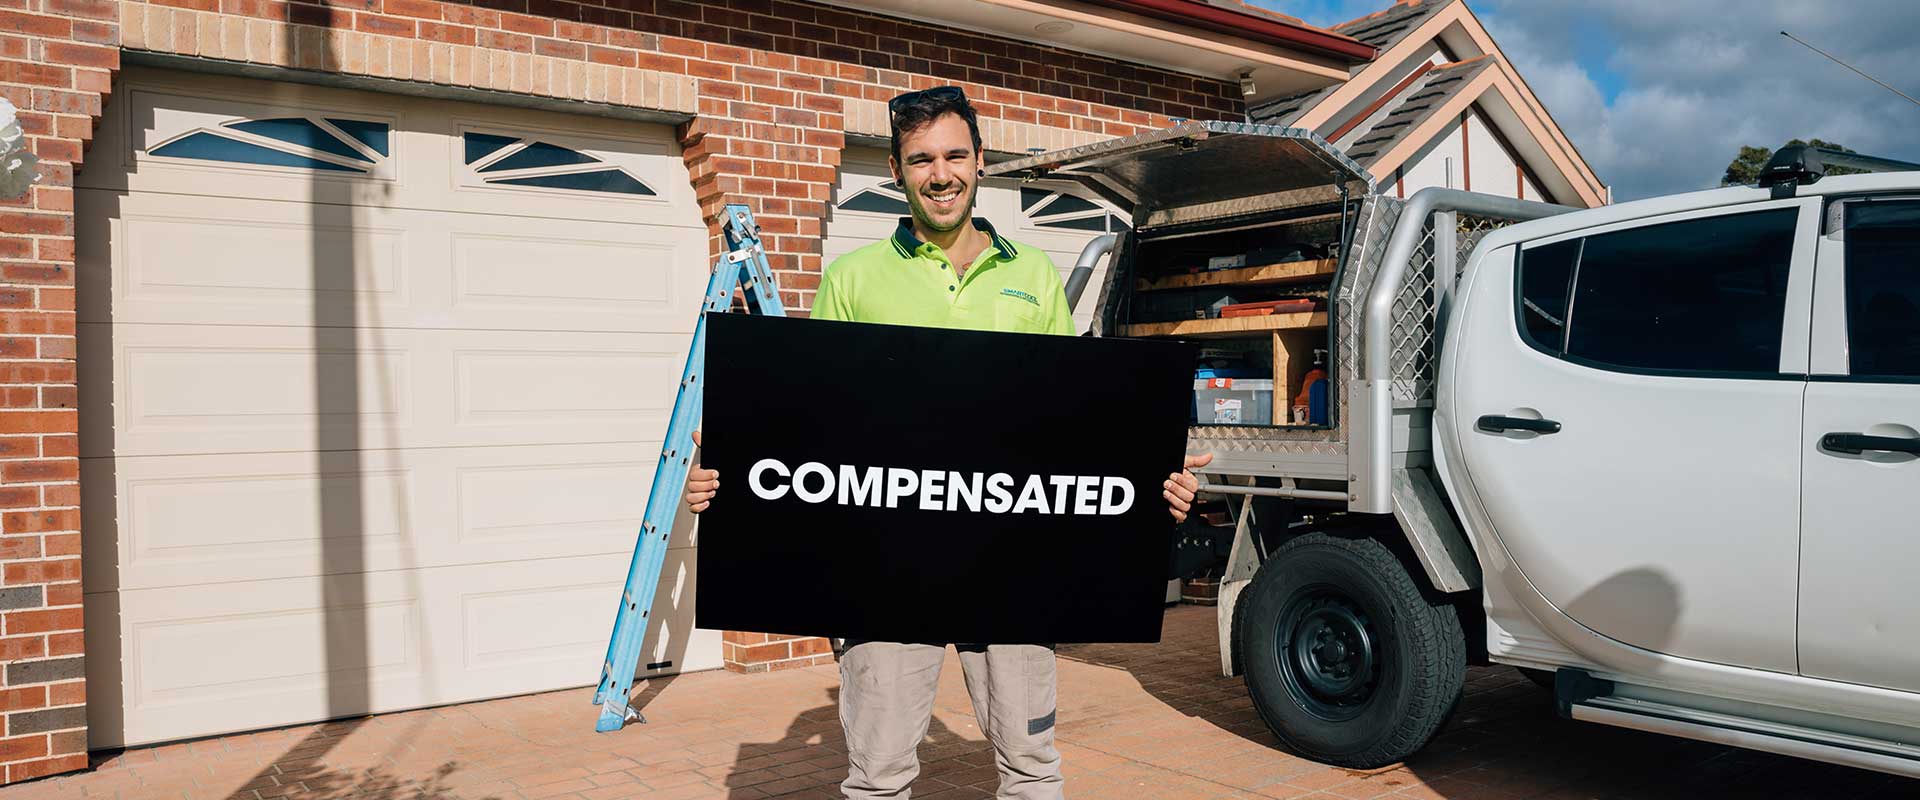 compensation/banner-comp-south-bottom.jpg